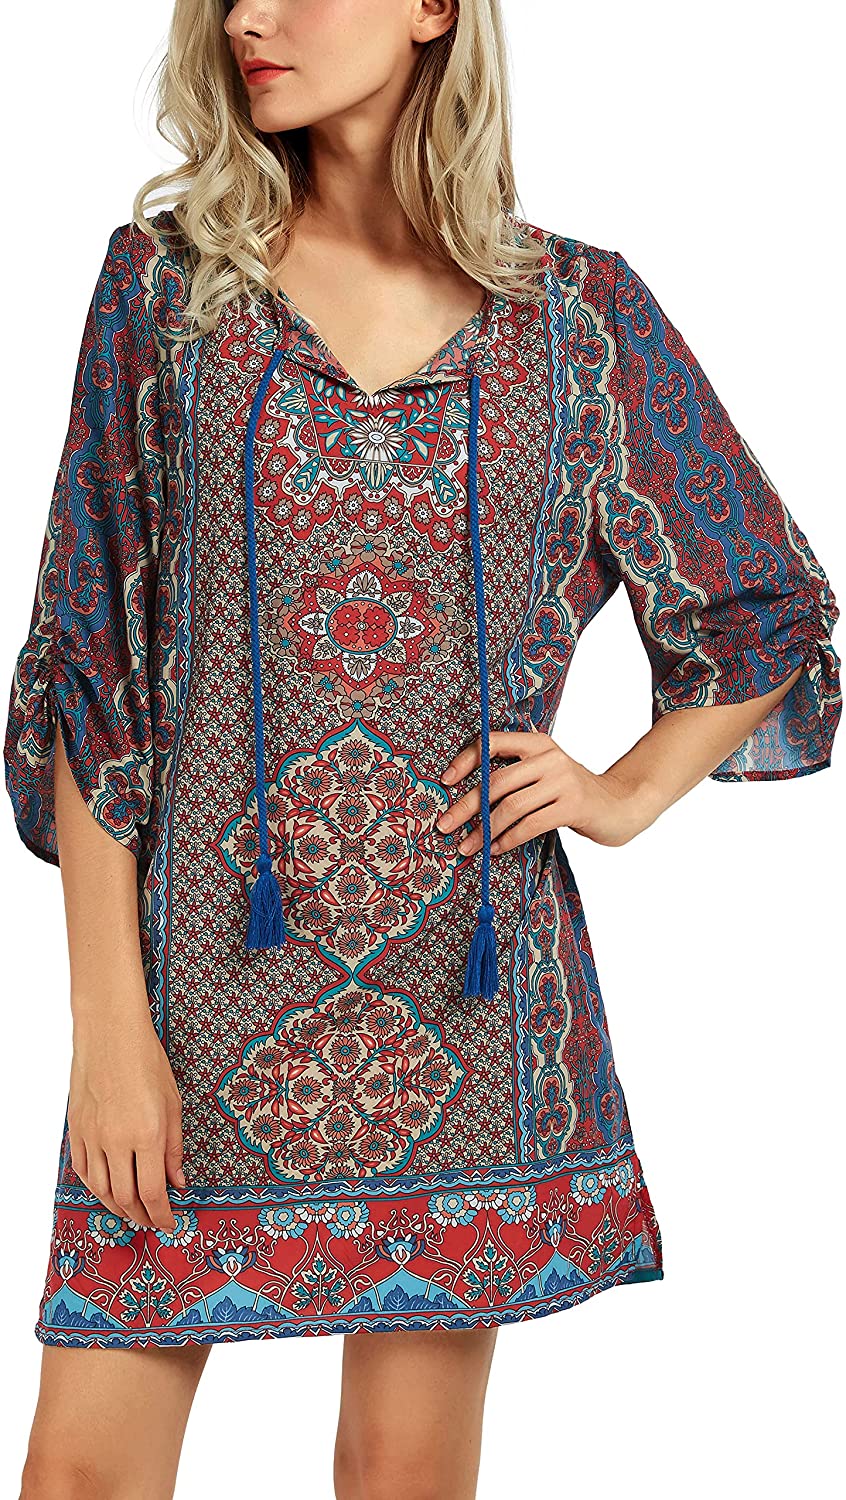 Women Bohemian Neck Tie Vintage Printed Ethnic Style Summer Shift Dress |  eBay